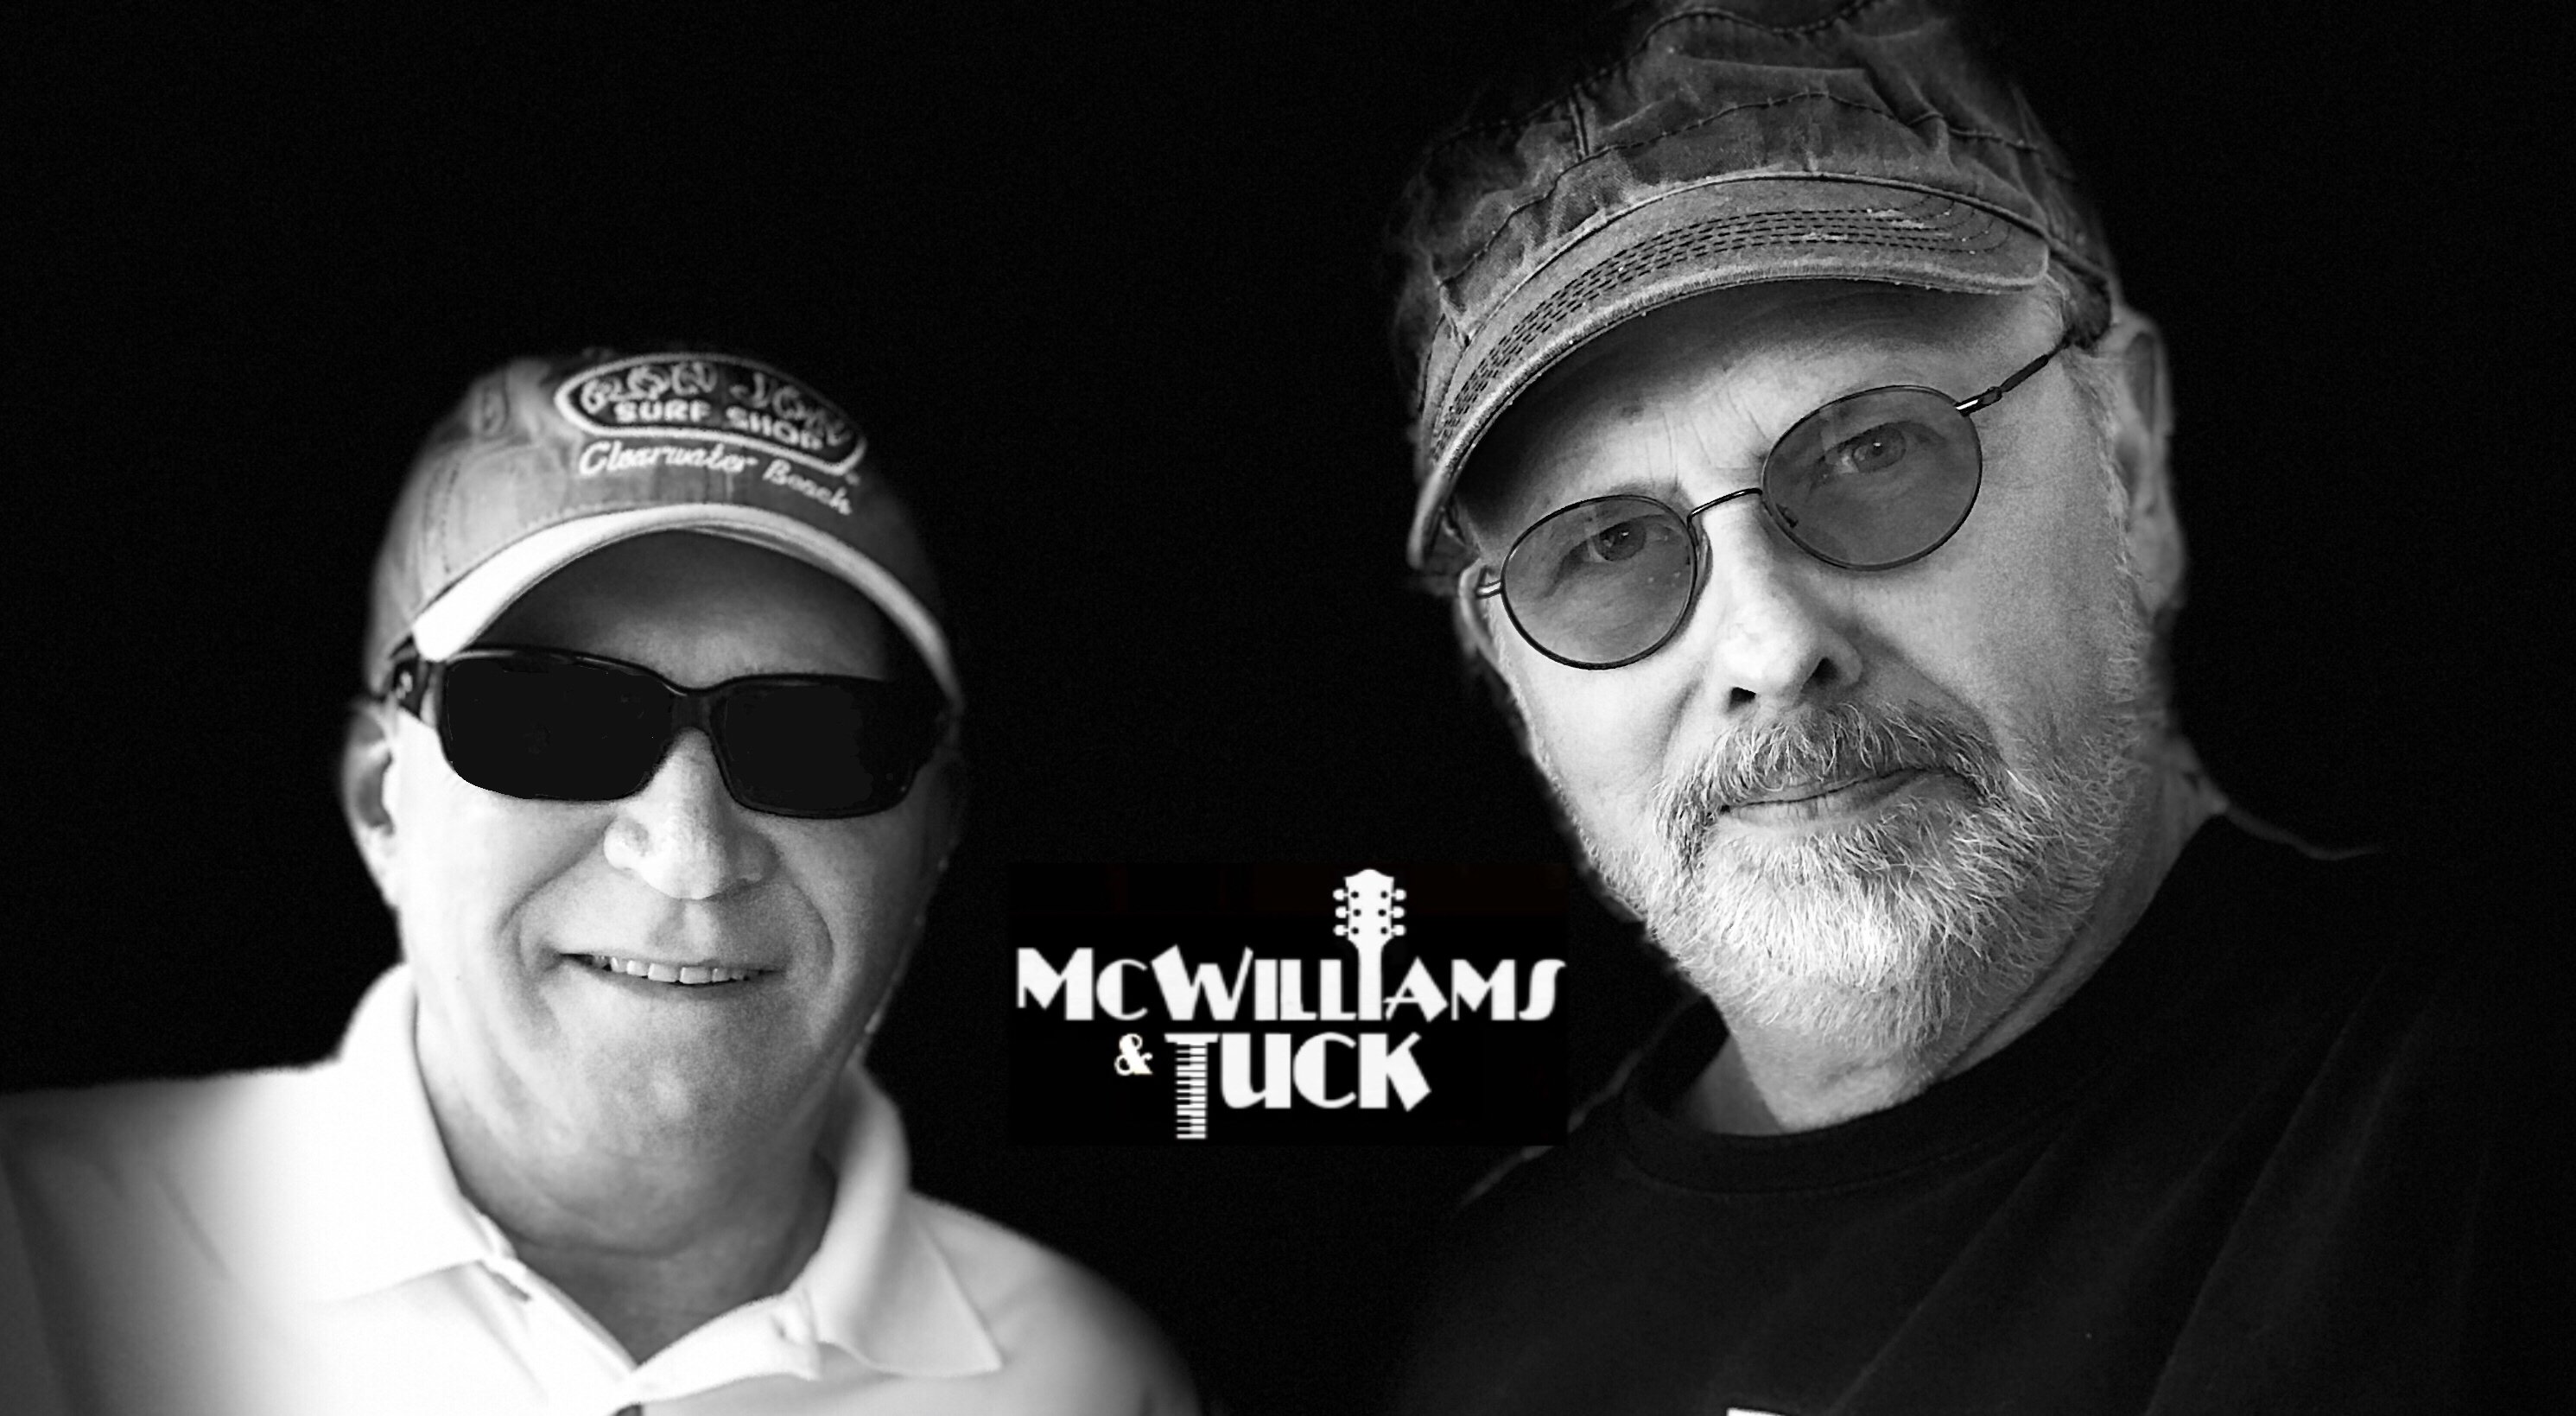 McWilliams & Tuck